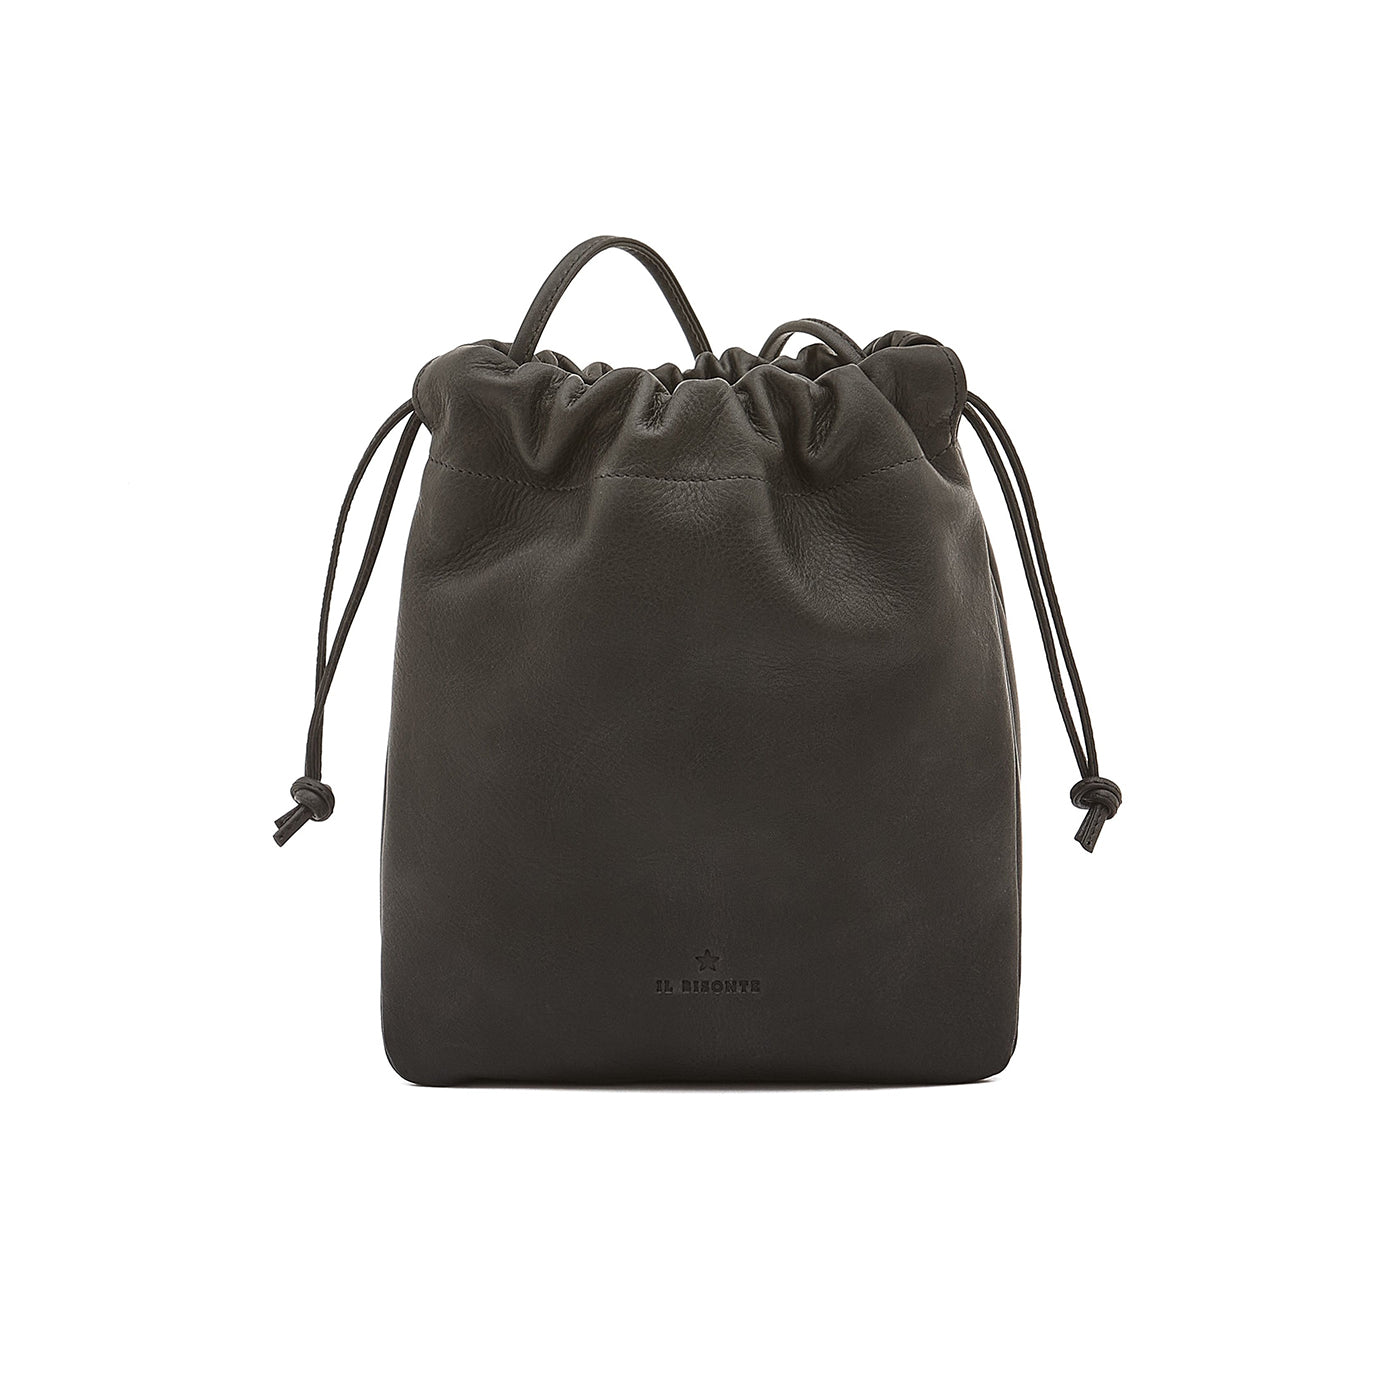 Bellini Bucket Bag in Black